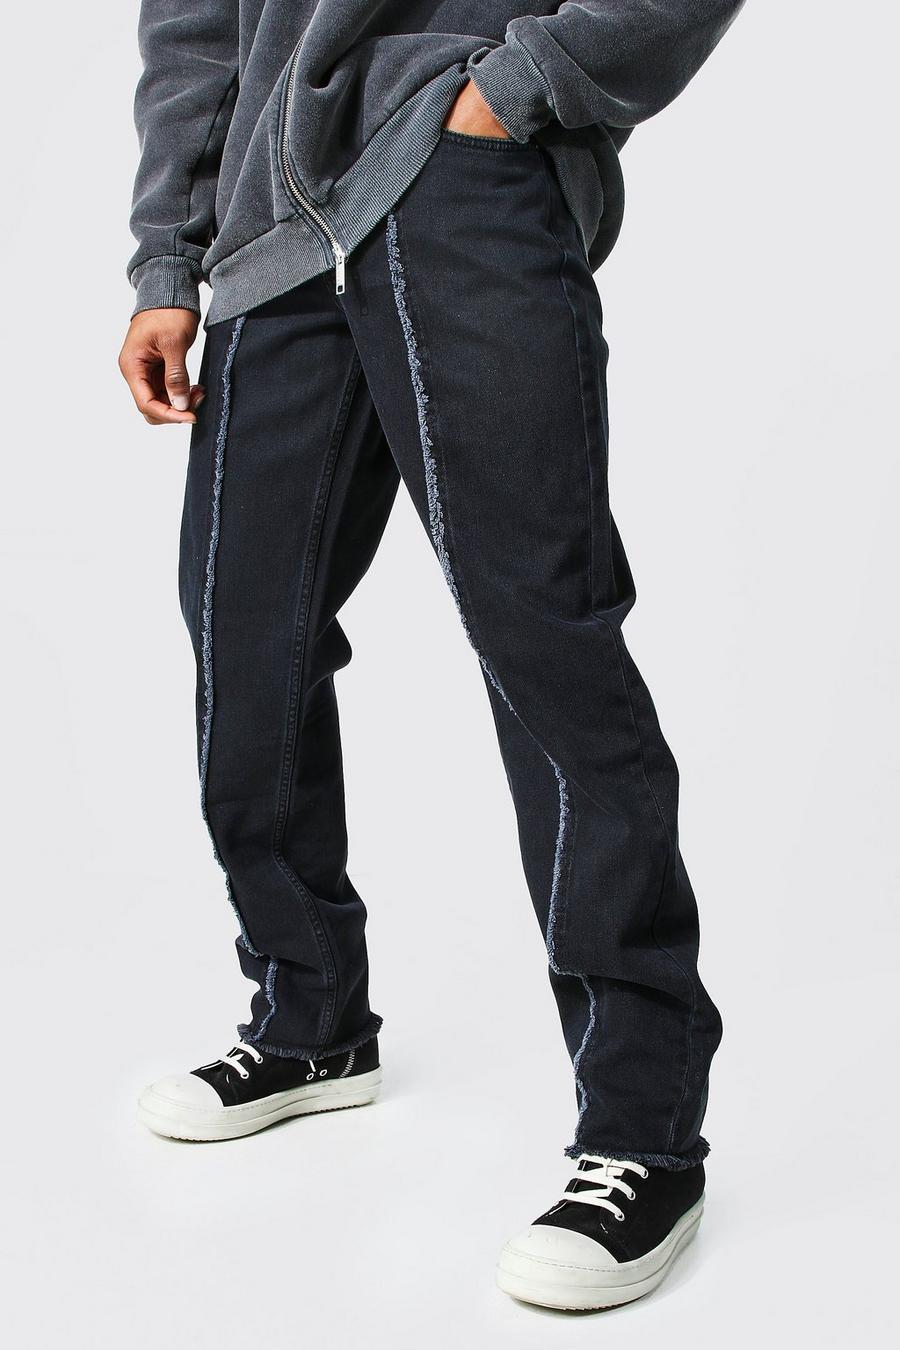 Jeans con cuciture a contrasto, taglio rilassato, Washed black image number 1